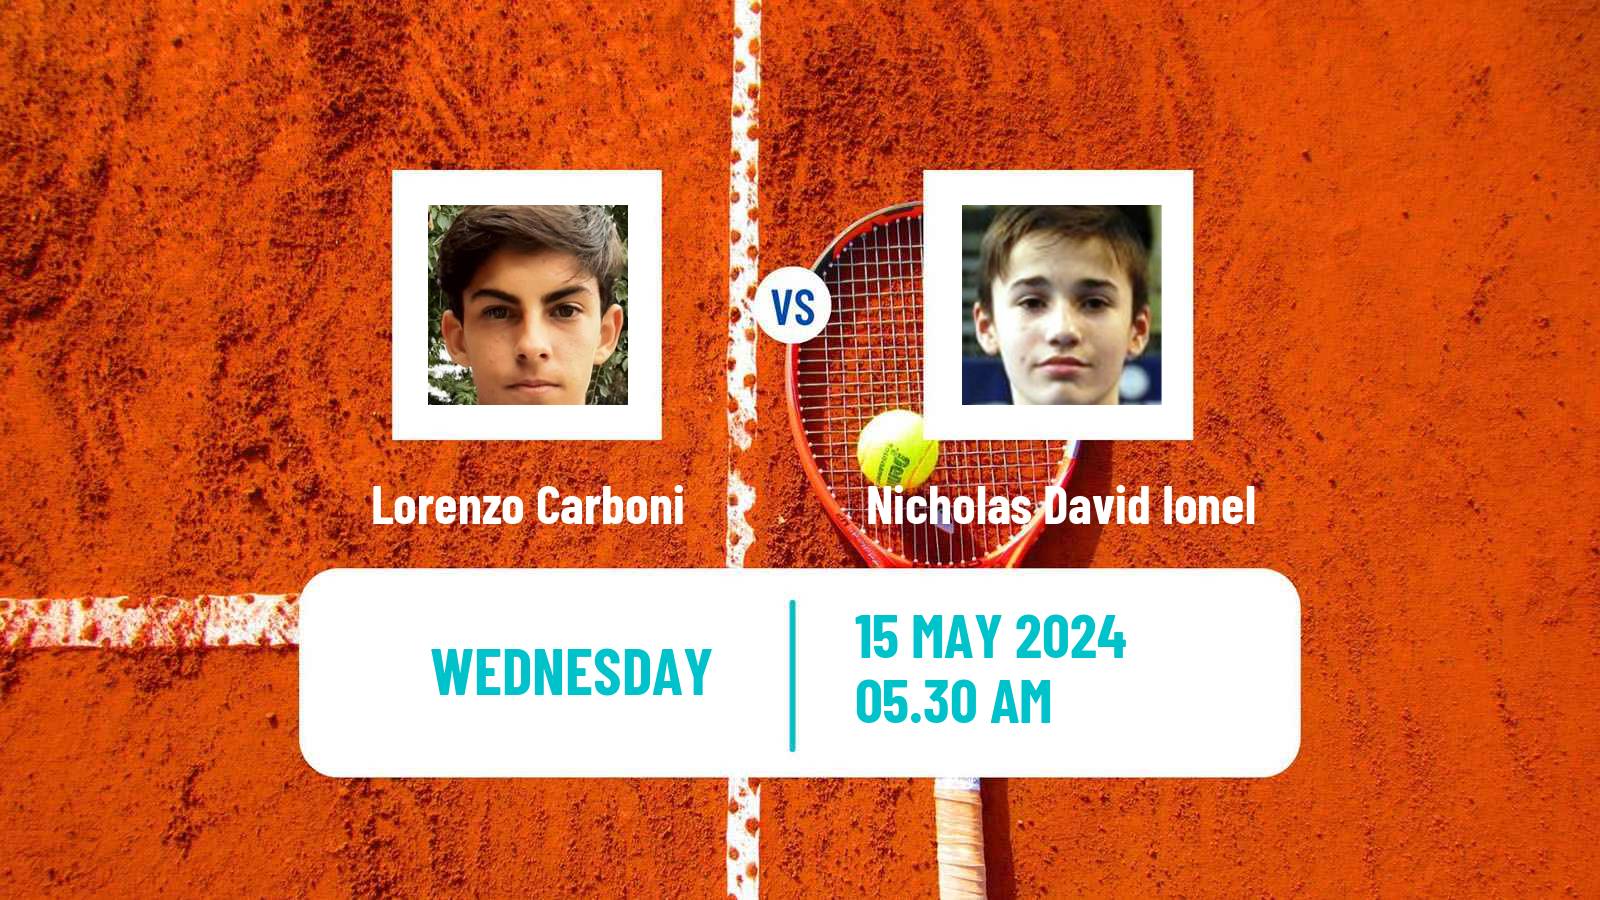 Tennis ITF M15 Bucharest 2 Men Lorenzo Carboni - Nicholas David Ionel